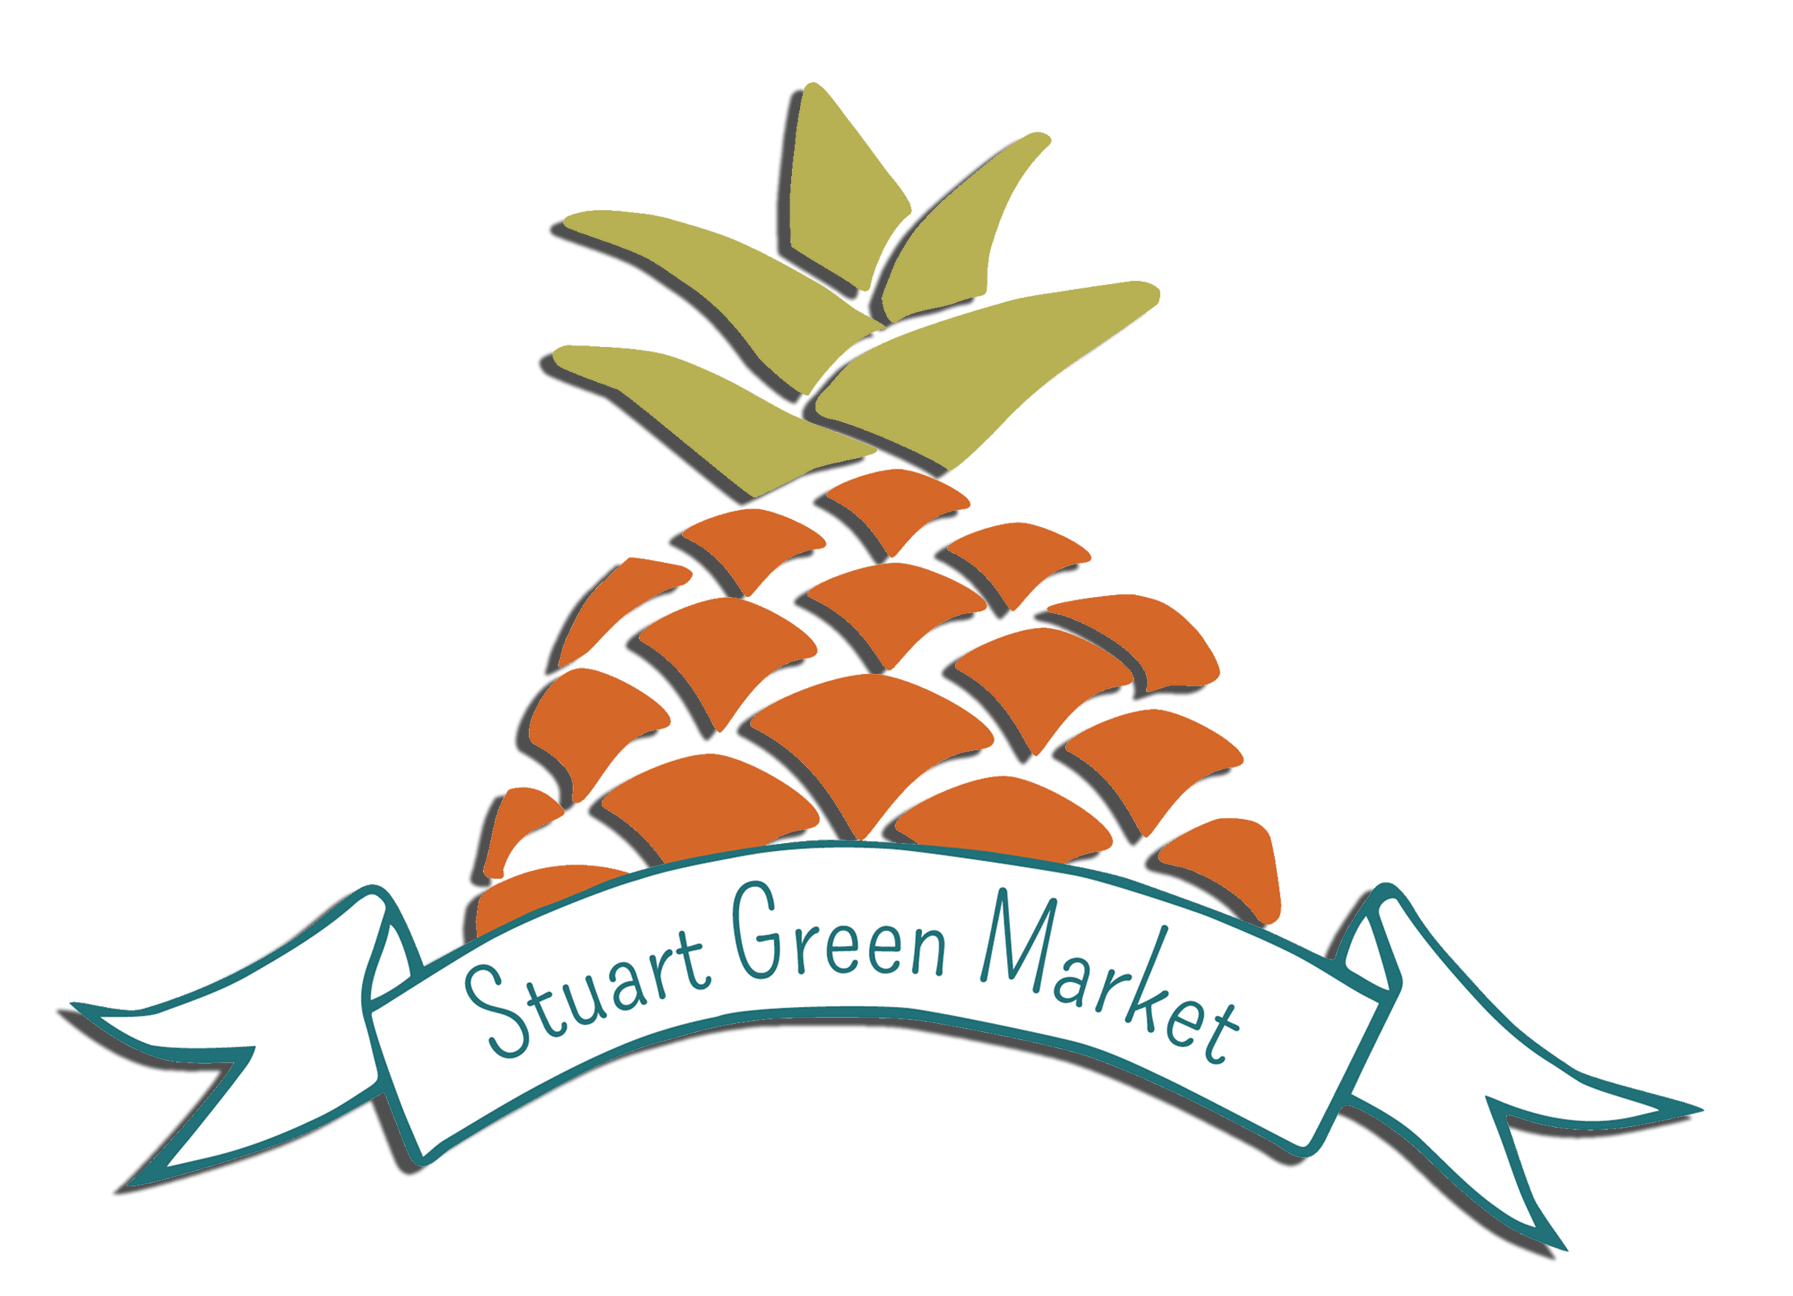 Green Markets Logo - Market events. The Stuart Green Market